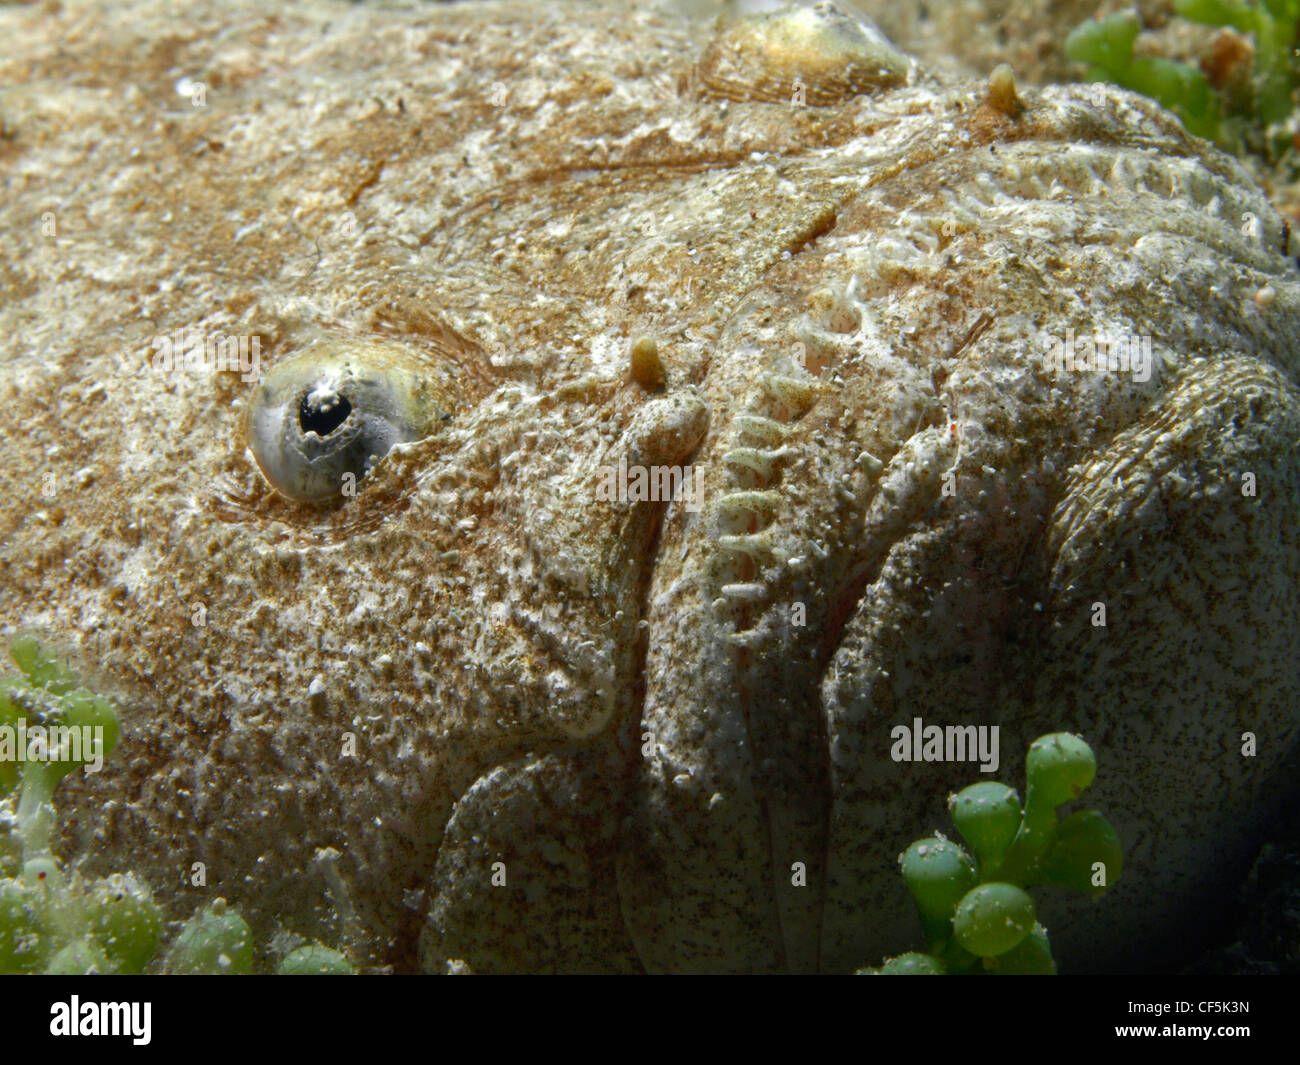 Uranoscopus scaber (rat fish) in Benidorm (Spain) Stock Photo